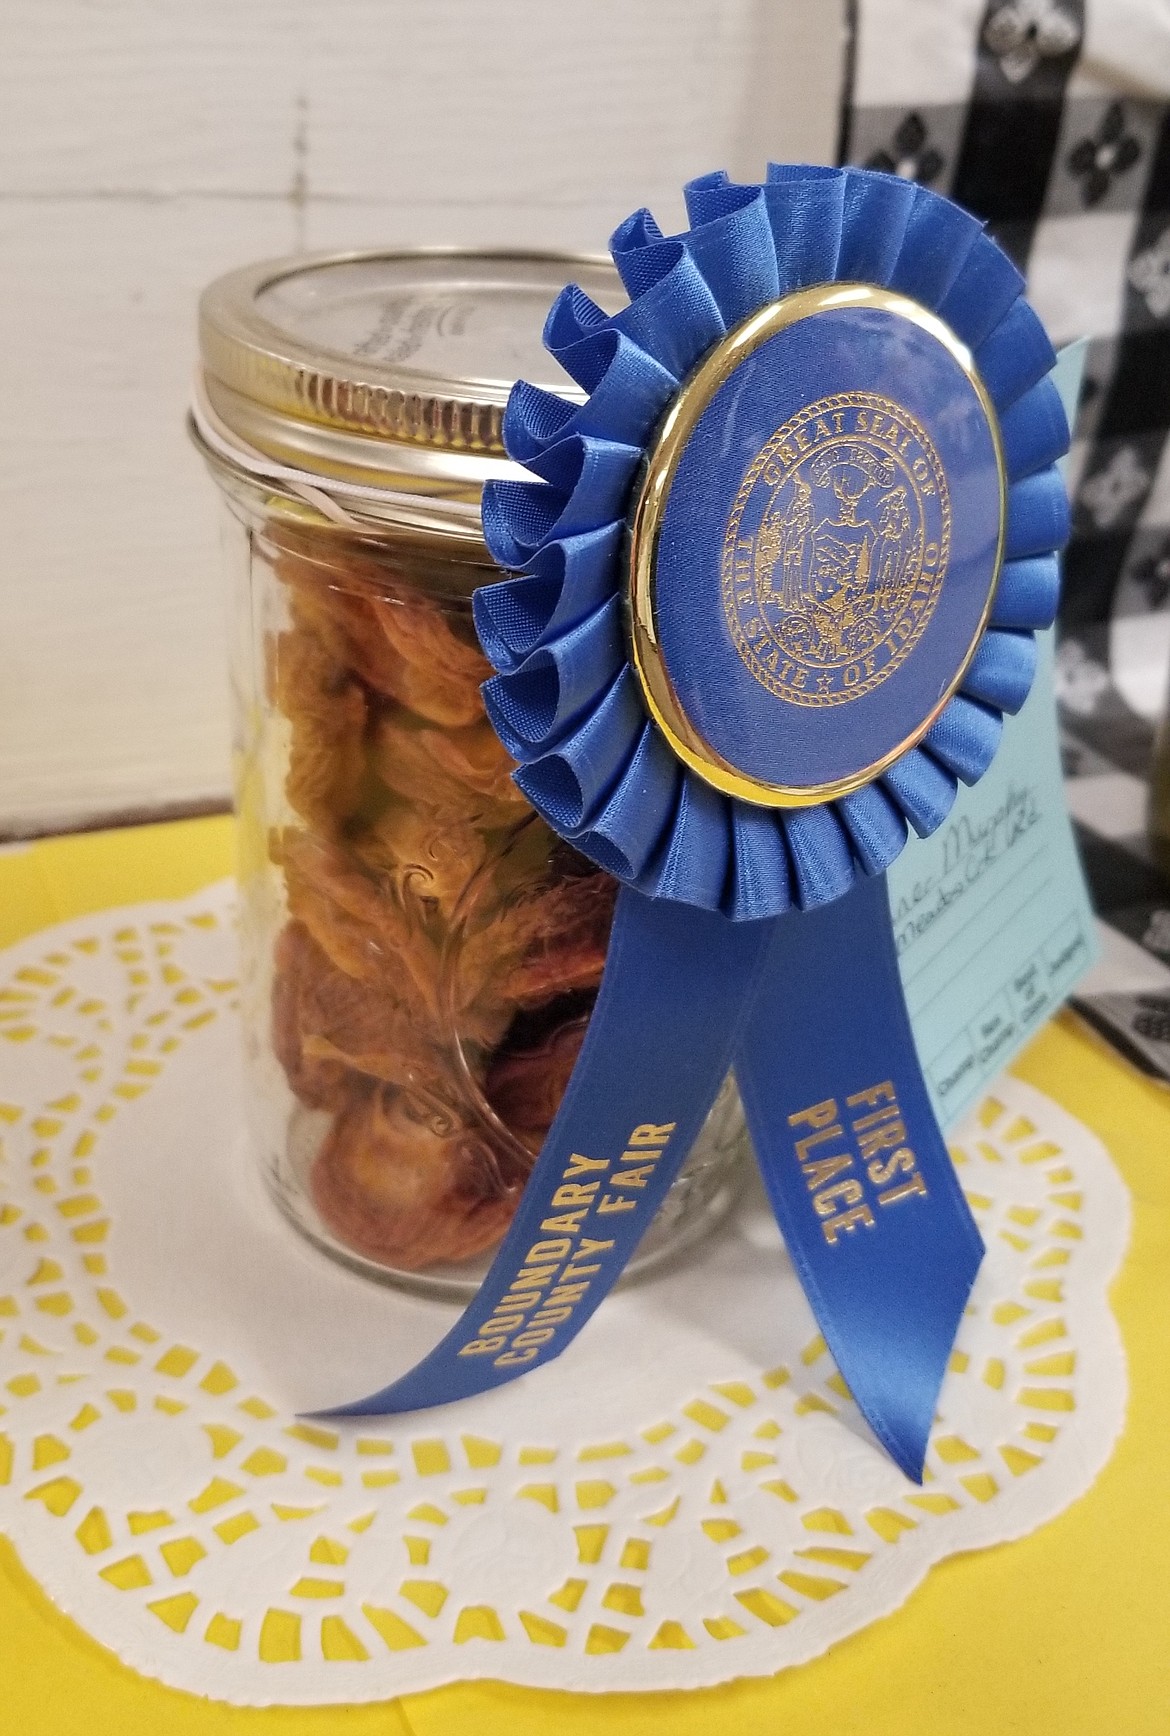 Photo by MANDI BATEMANThis jar of dried fruit won a blue ribbon.